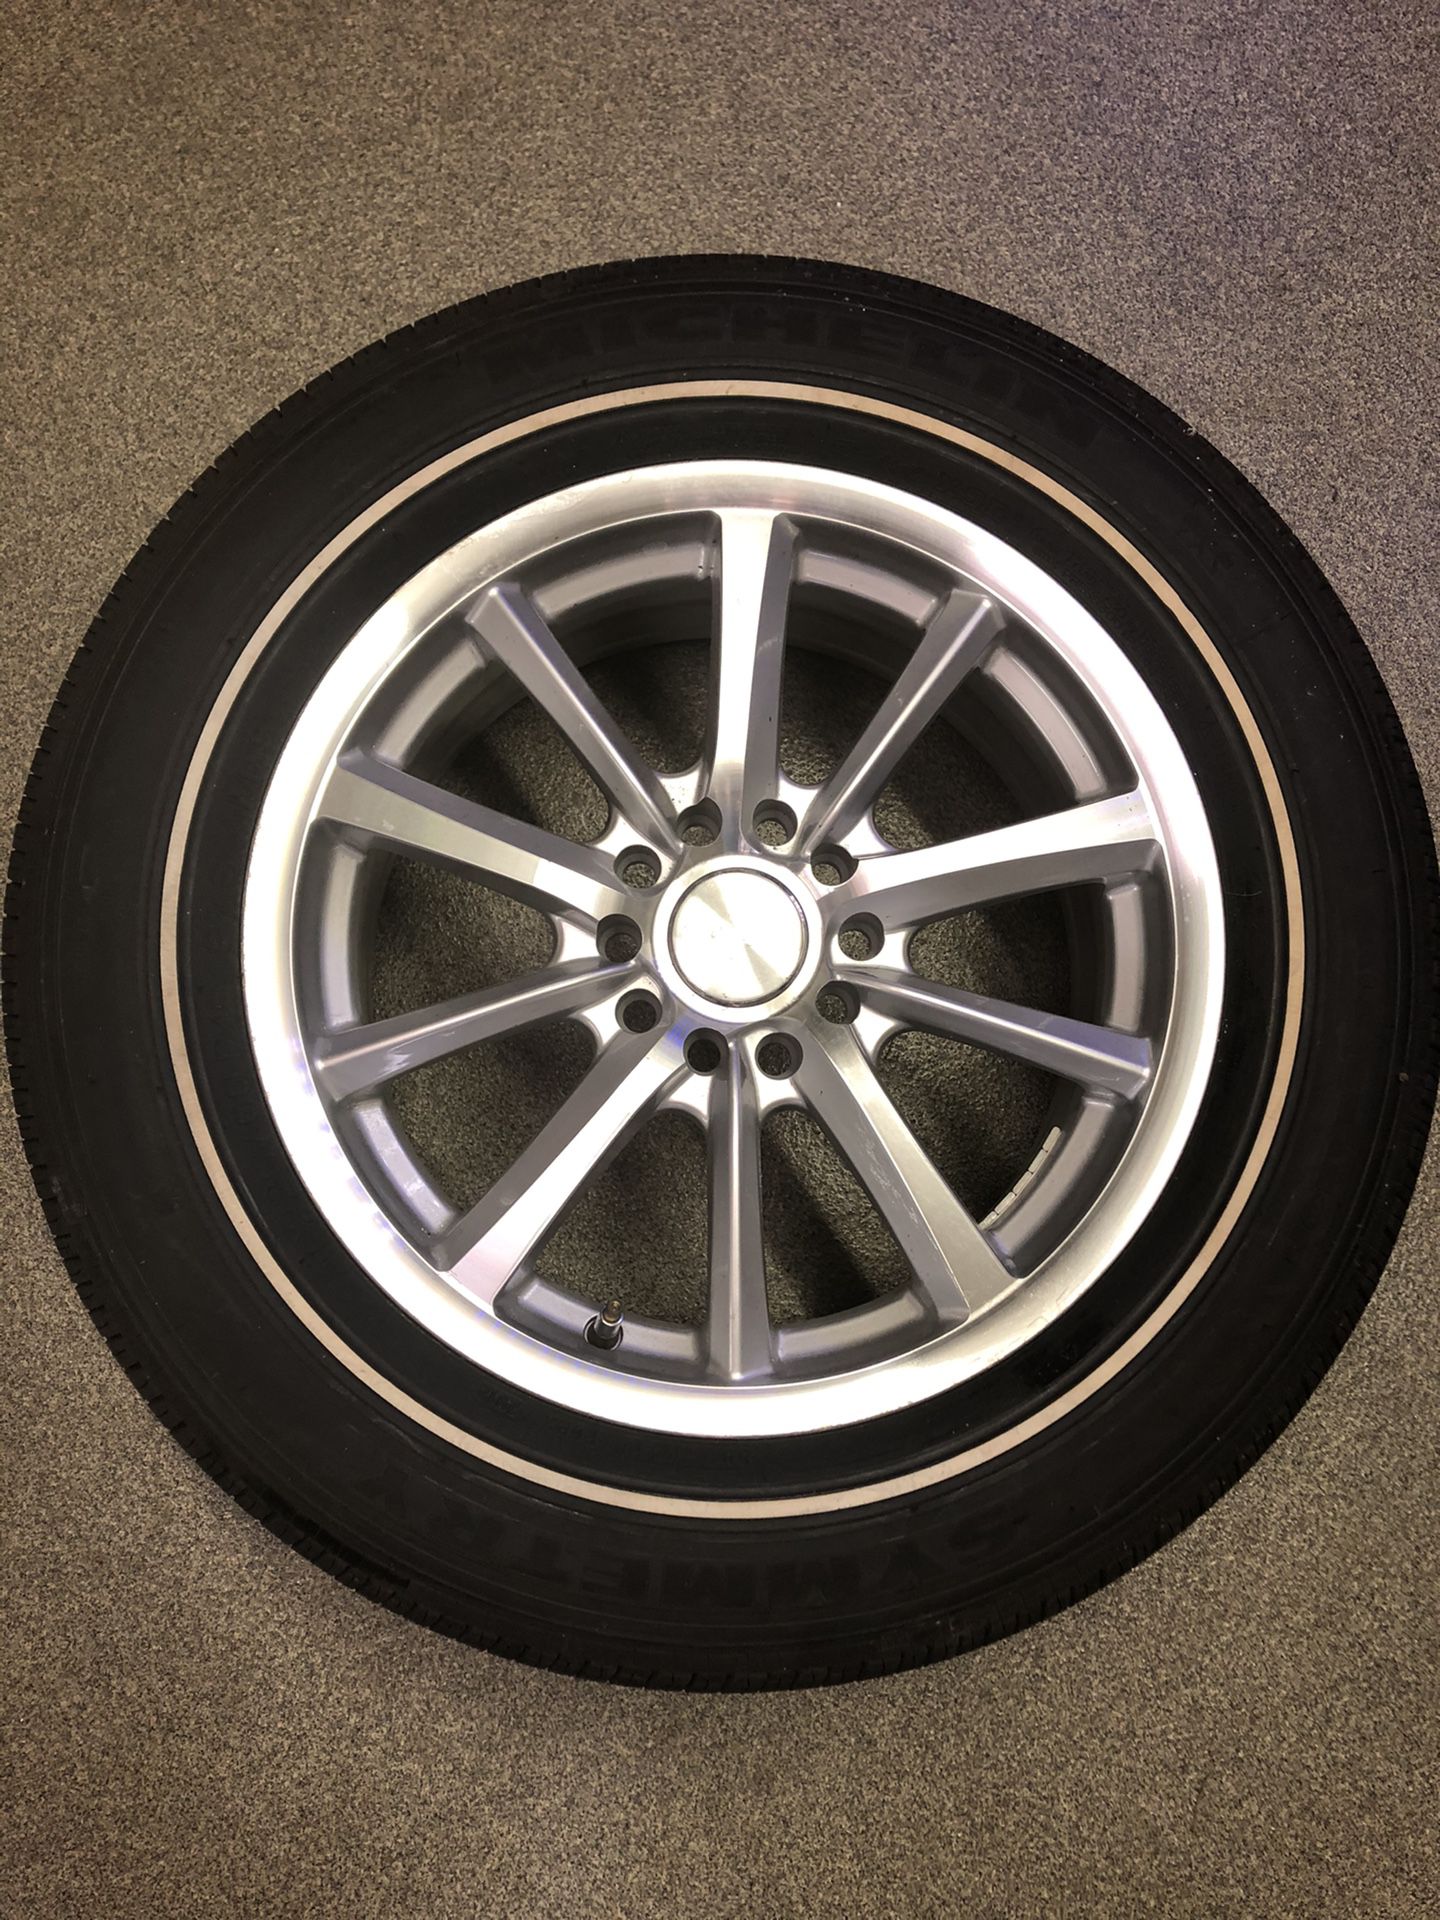 Brand New 16 x 7, 5x114.3, 5x110 Michelin 225/60R16 Tire Cadillac Rim, wheel, Aluminum